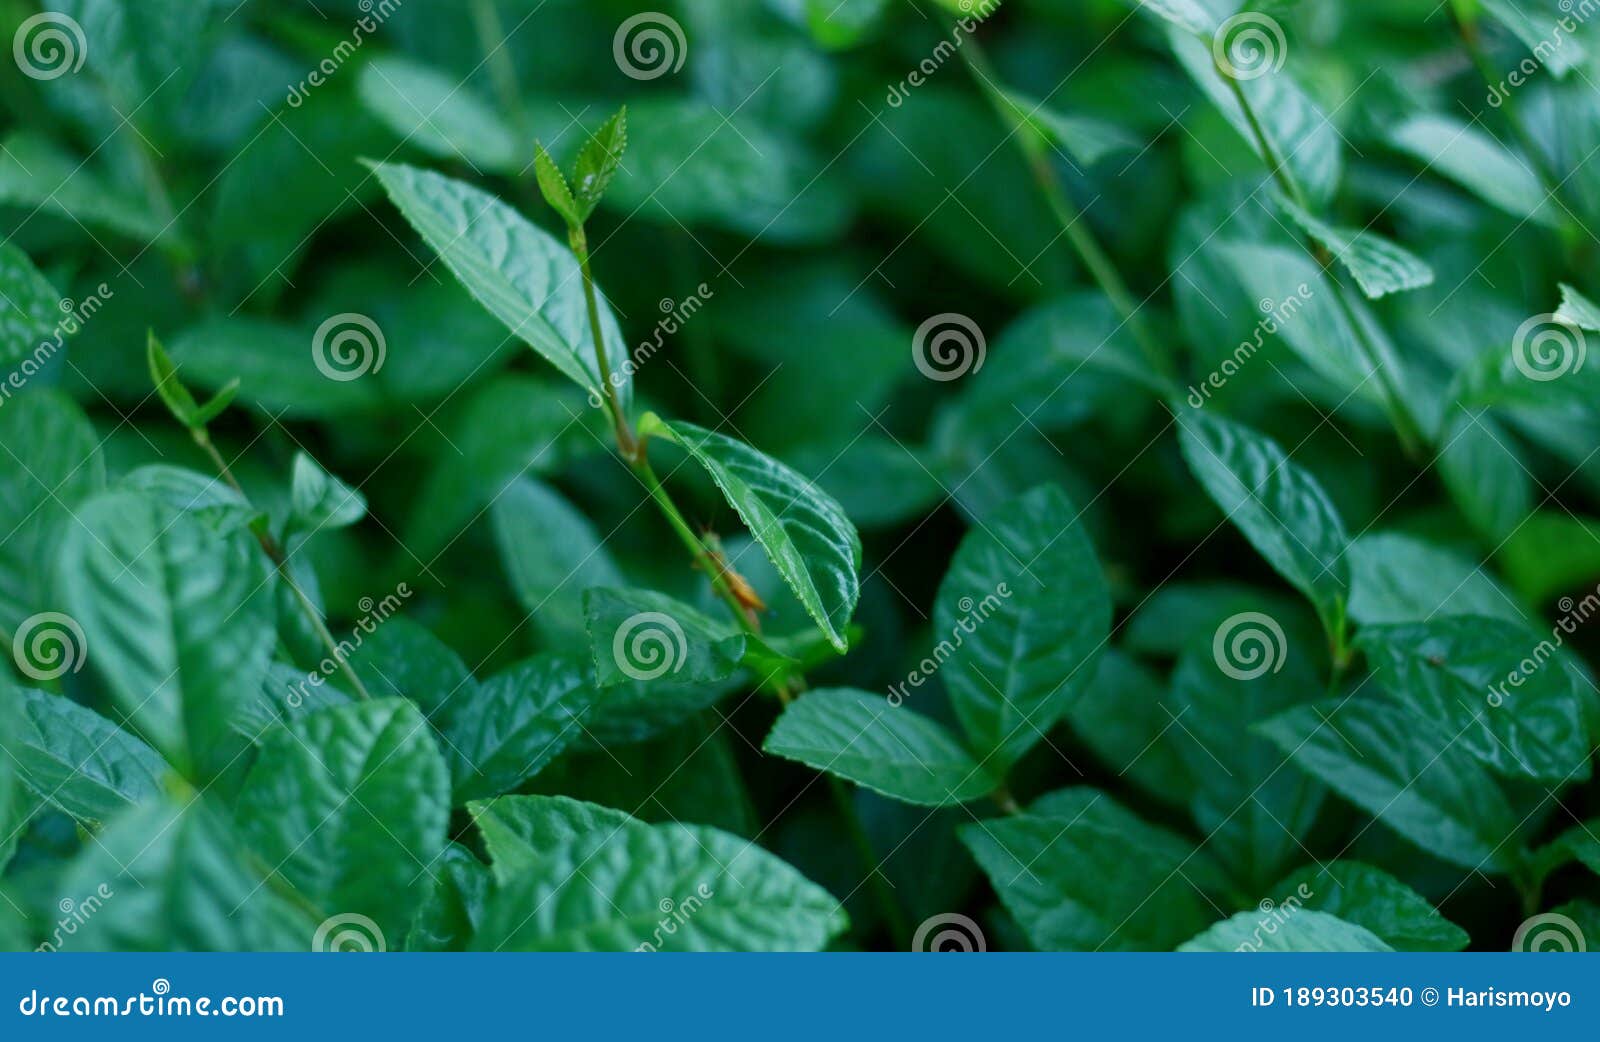 heuras tulang leaf or chloranthus officinalis